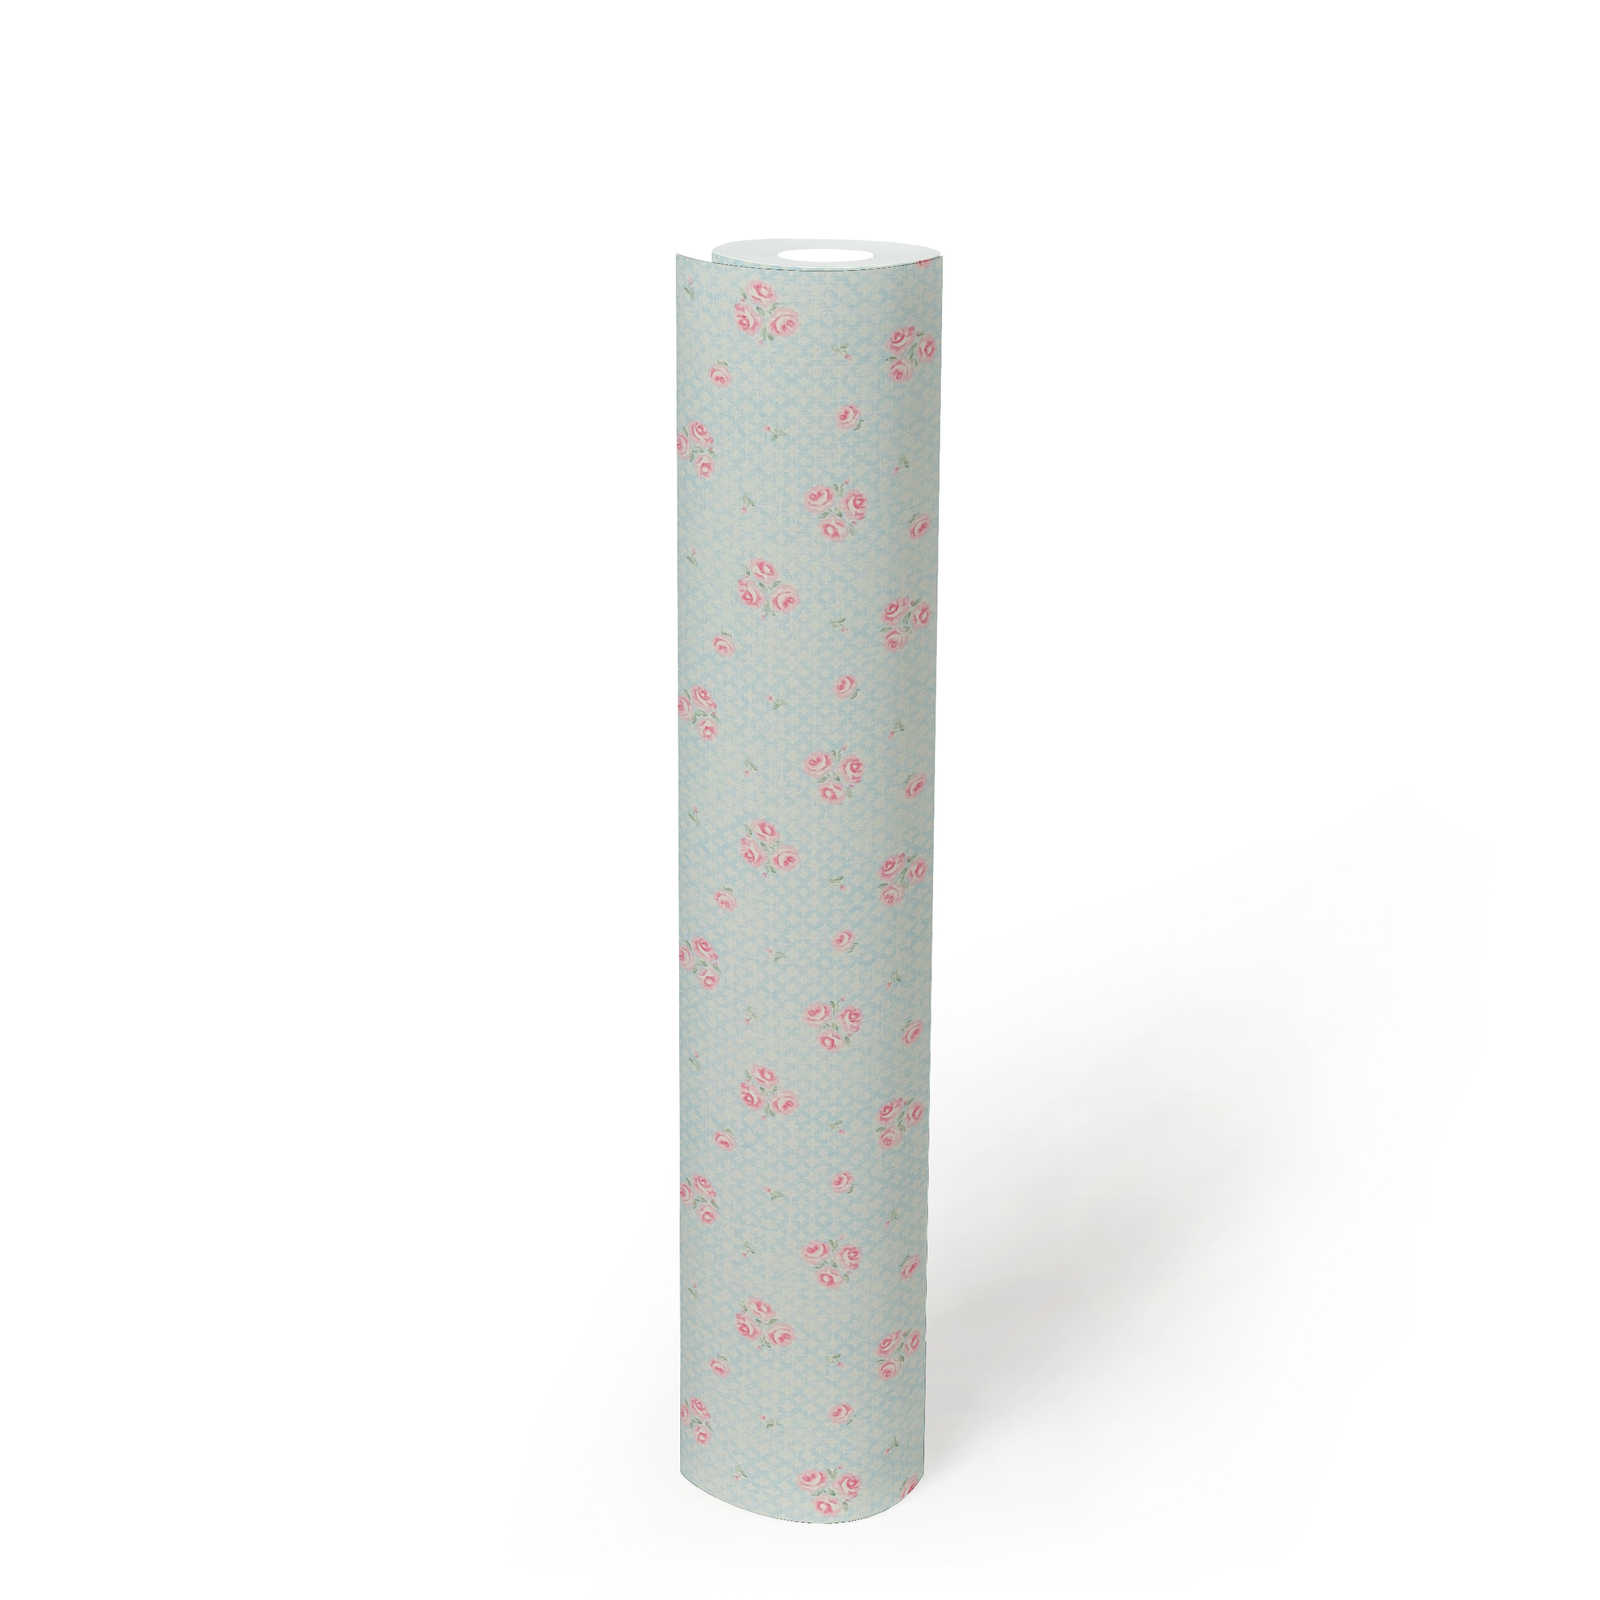             Papel pintado floral estilo Shabby Chic - azul, rosa, blanco
        